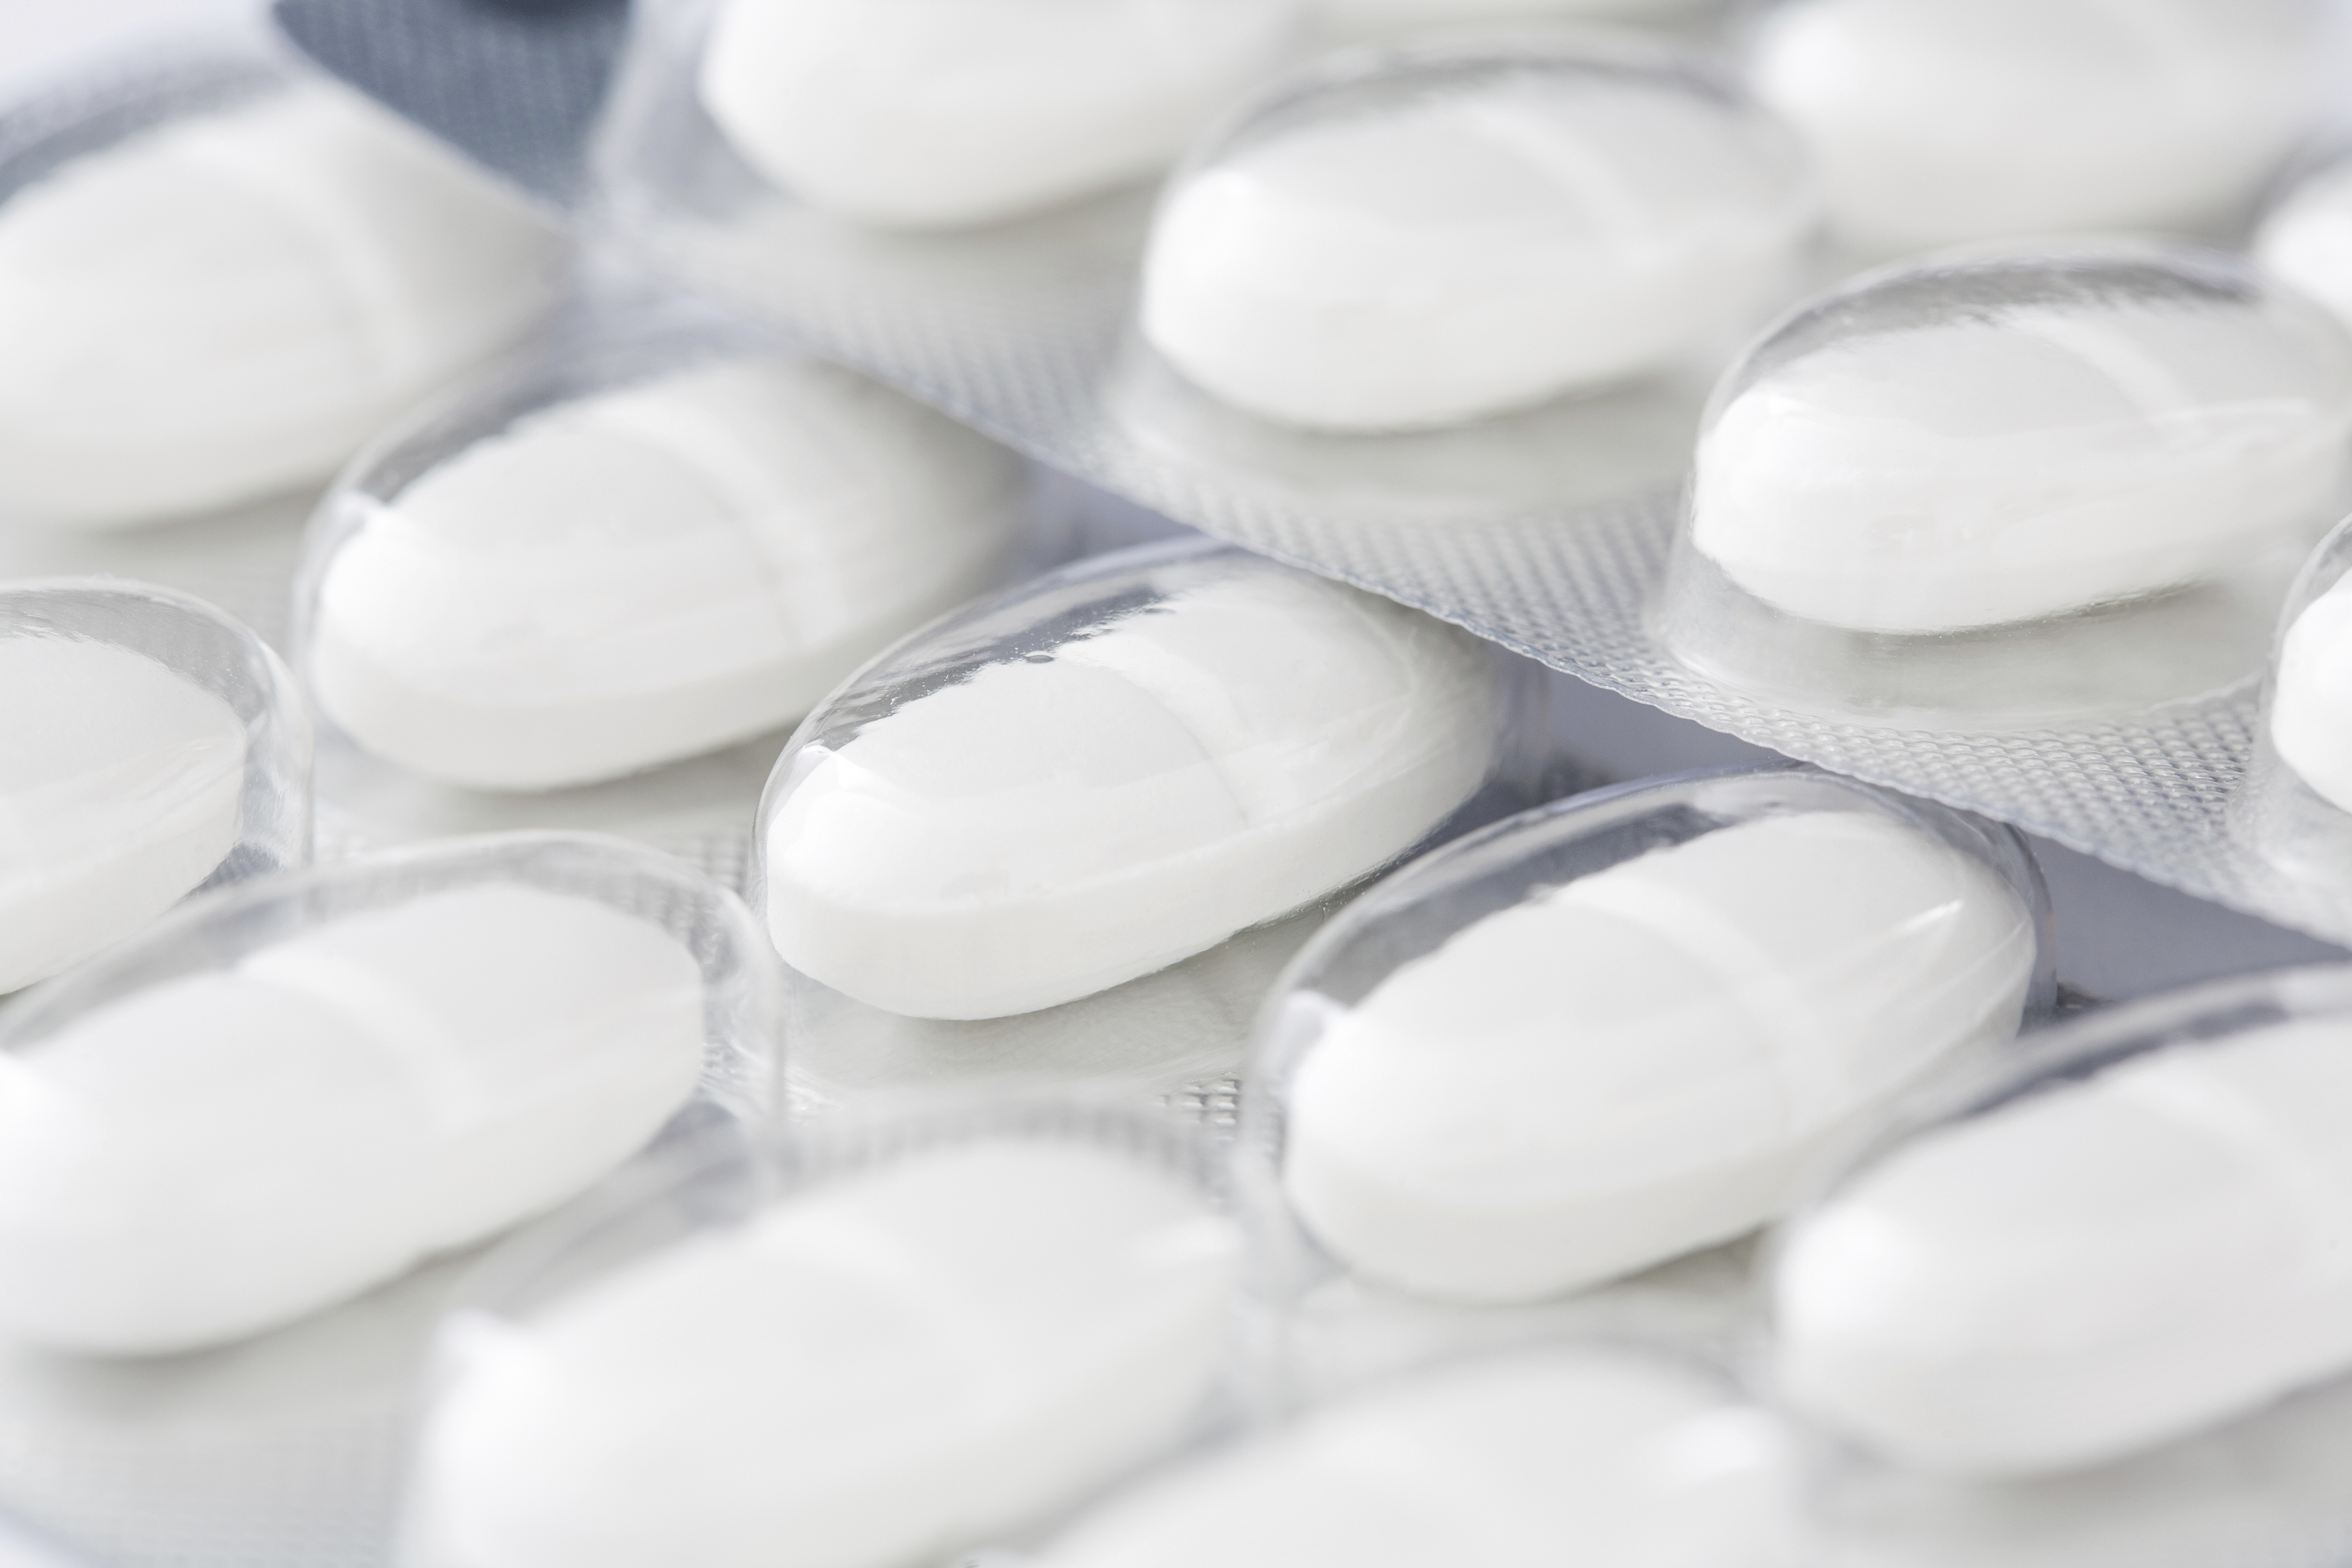 Paracetamol can cost 20 times more on prescription